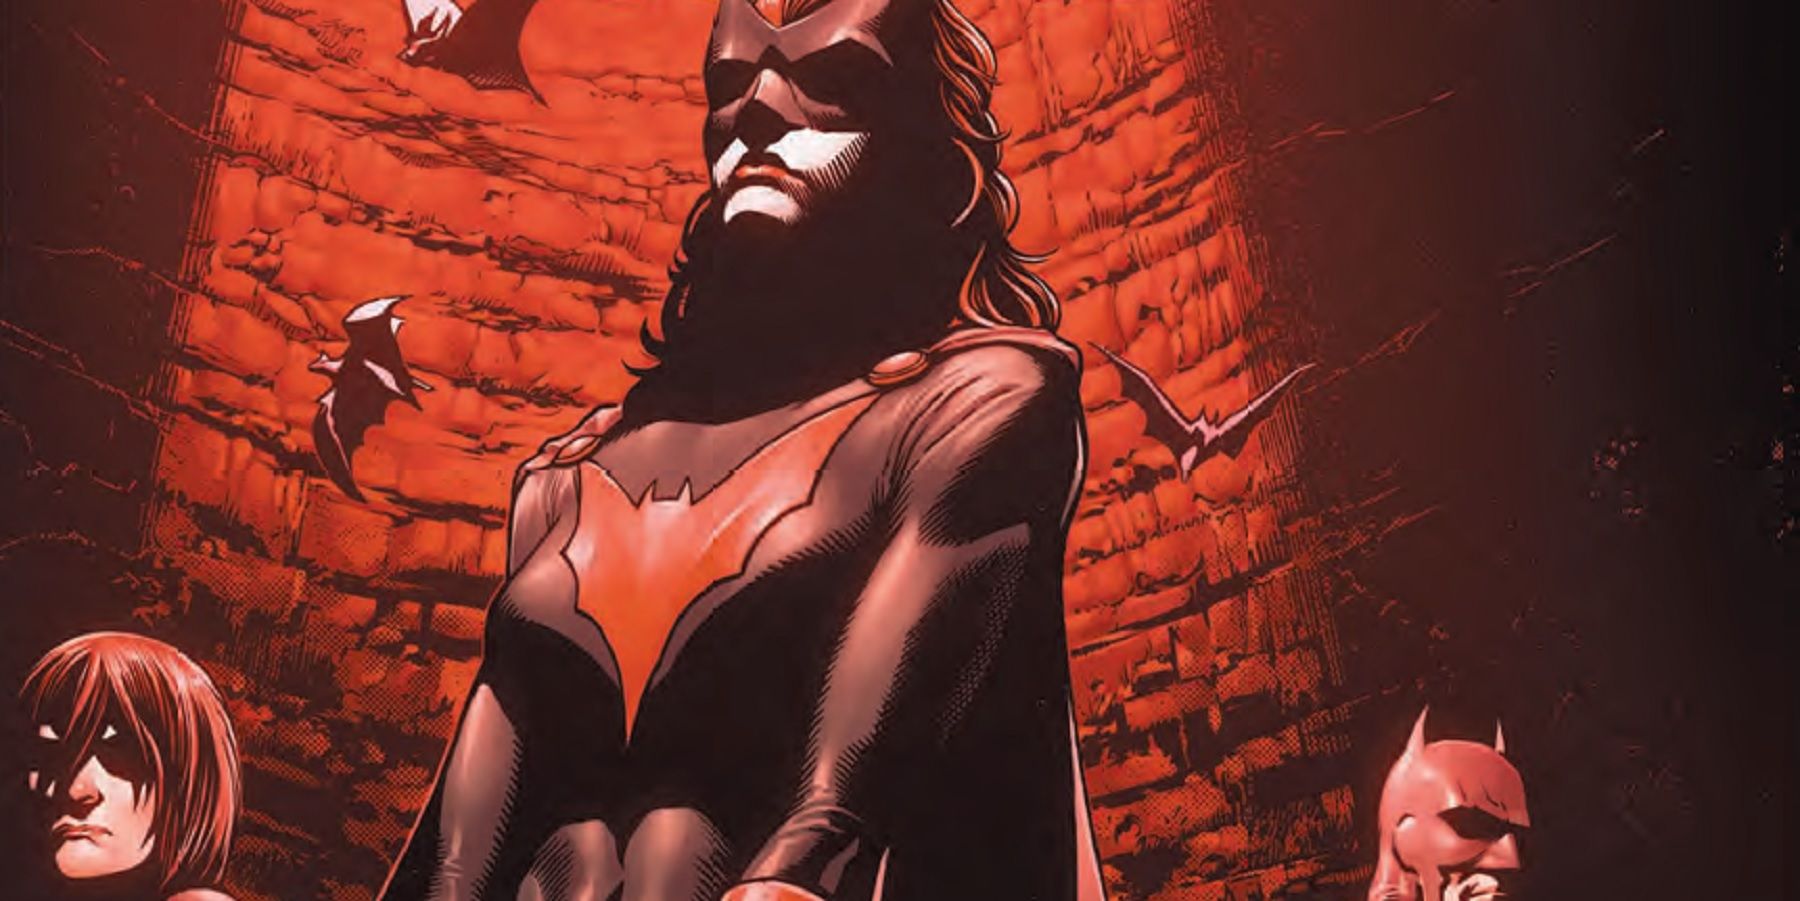 detective-comics-975-trial-of-batwoman-cover